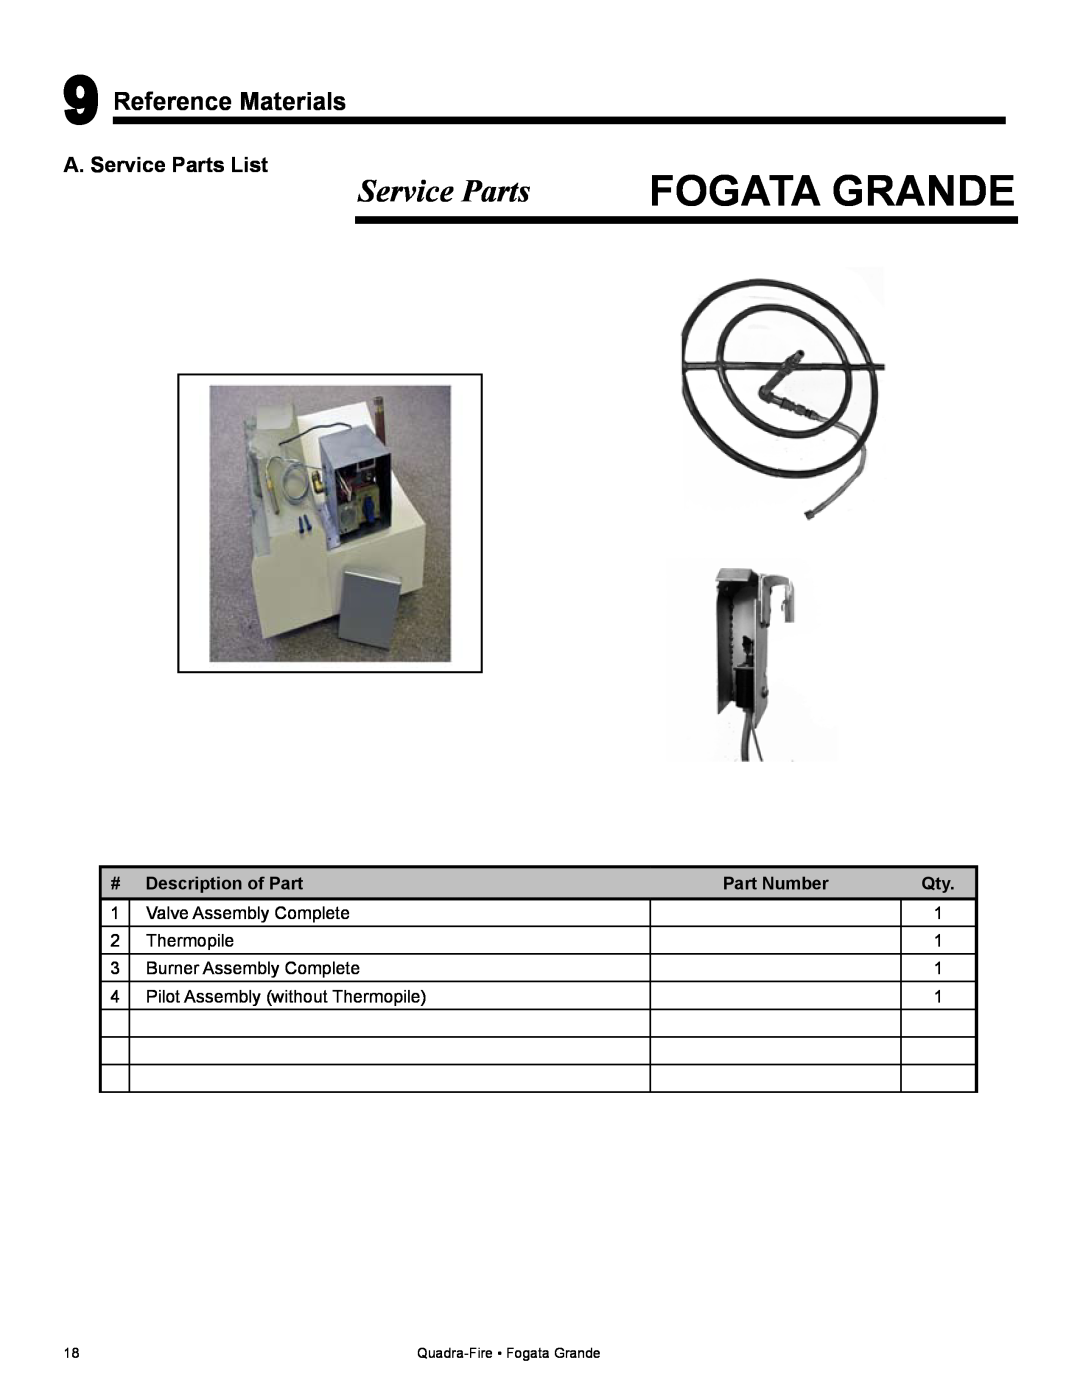 Quadra-Fire FG21SP-LP owner manual Service Parts, Reference Materials, Fogata Grande, # Description of Part, Part Number 